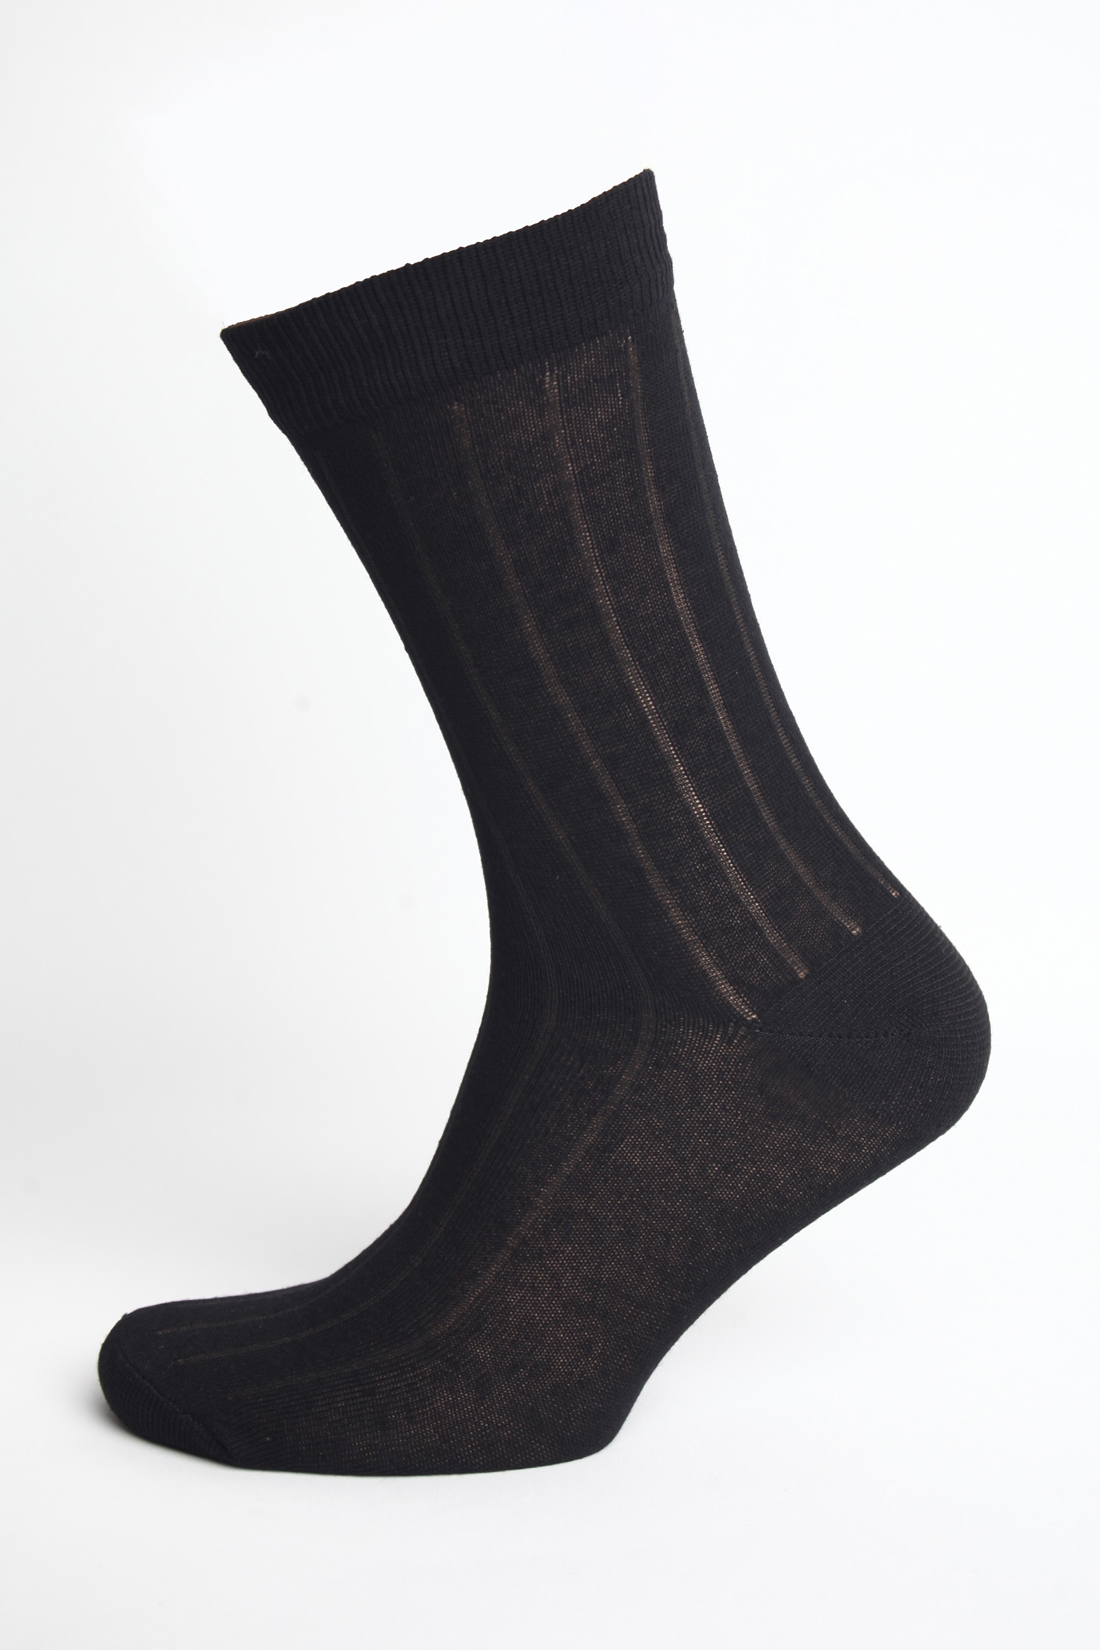 Мужские носки, 2 пары (арт. baon B891110), размер 40/42, цвет черный Мужские носки, 2 пары (арт. baon B891110) - фото 3